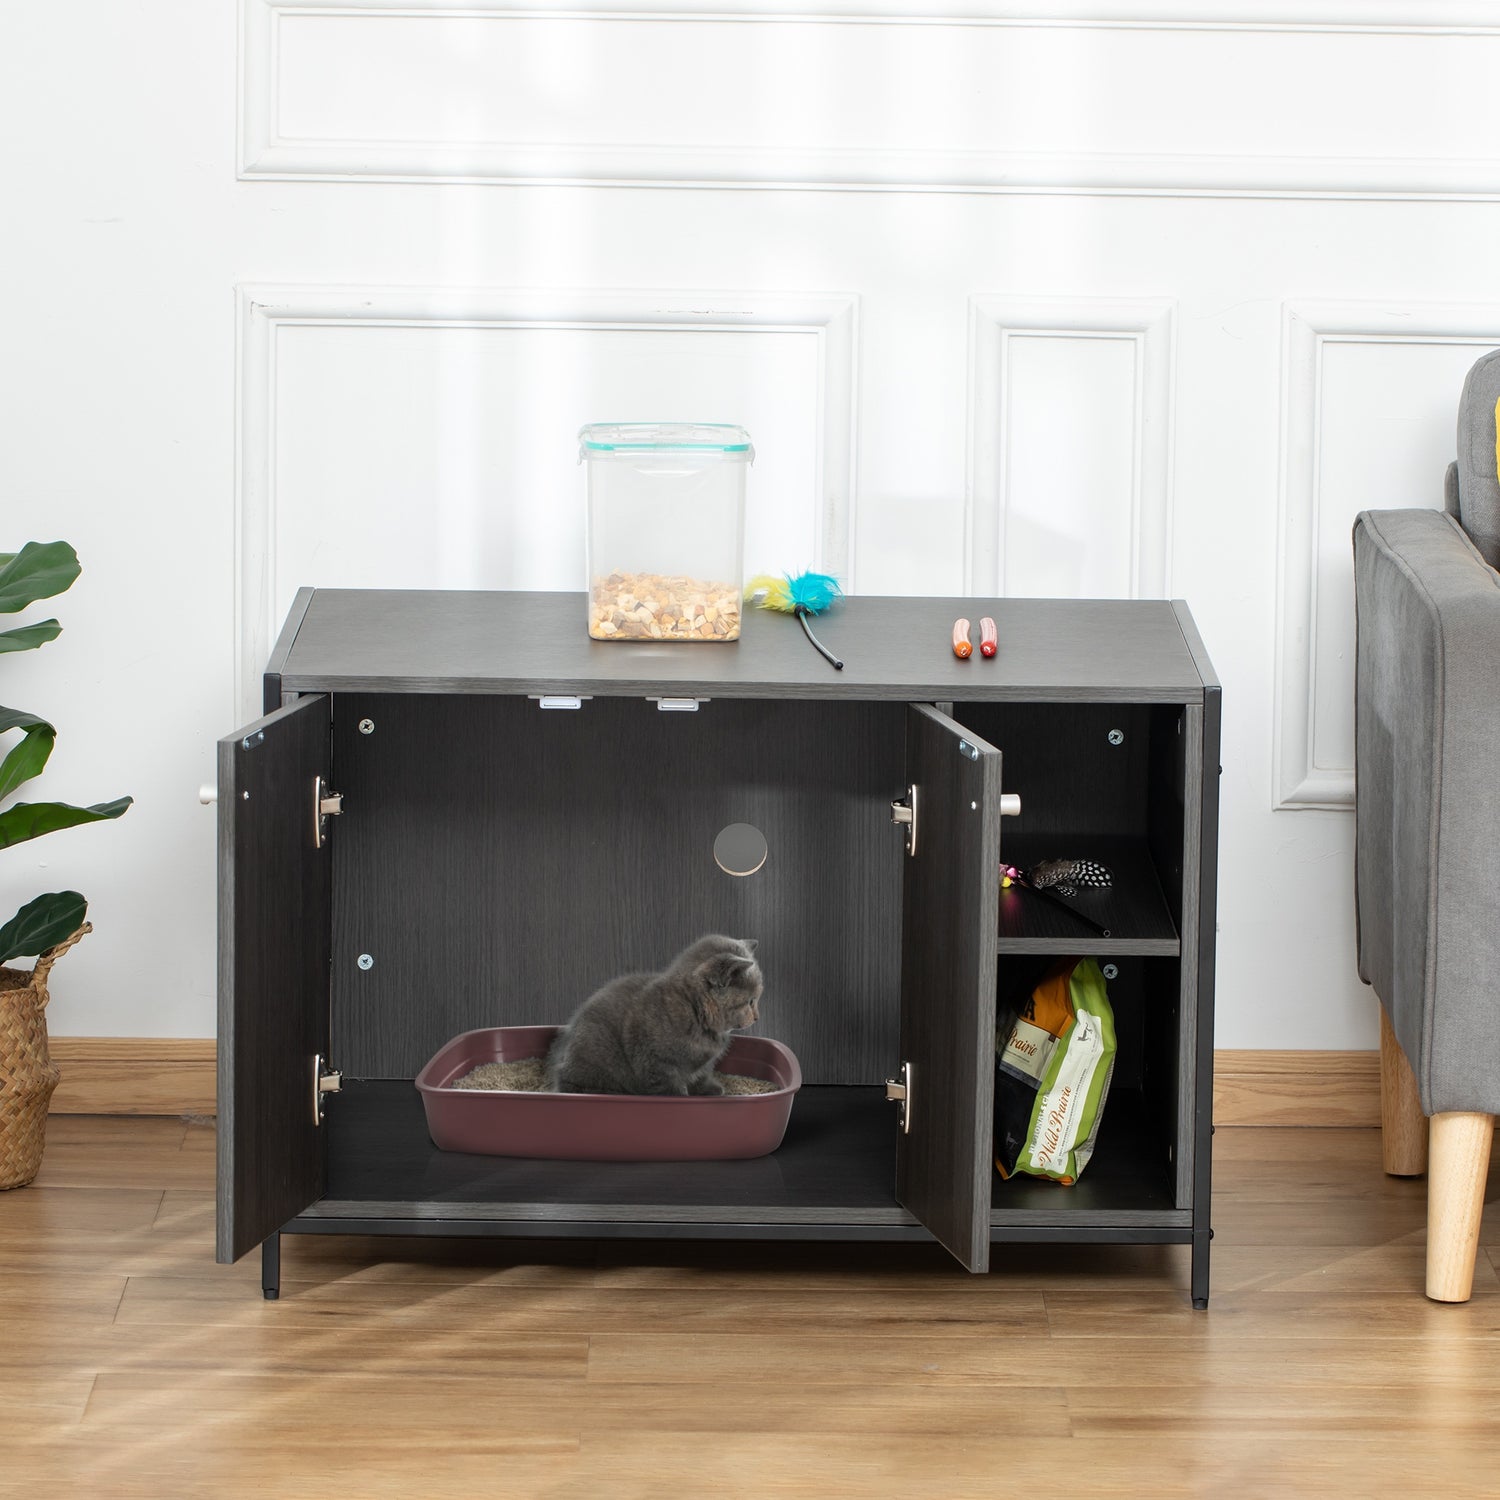 Eccomum Cat Litter Box Enclosure, Hidden Adjustable Cat Furniture with Damping Hinge, Black